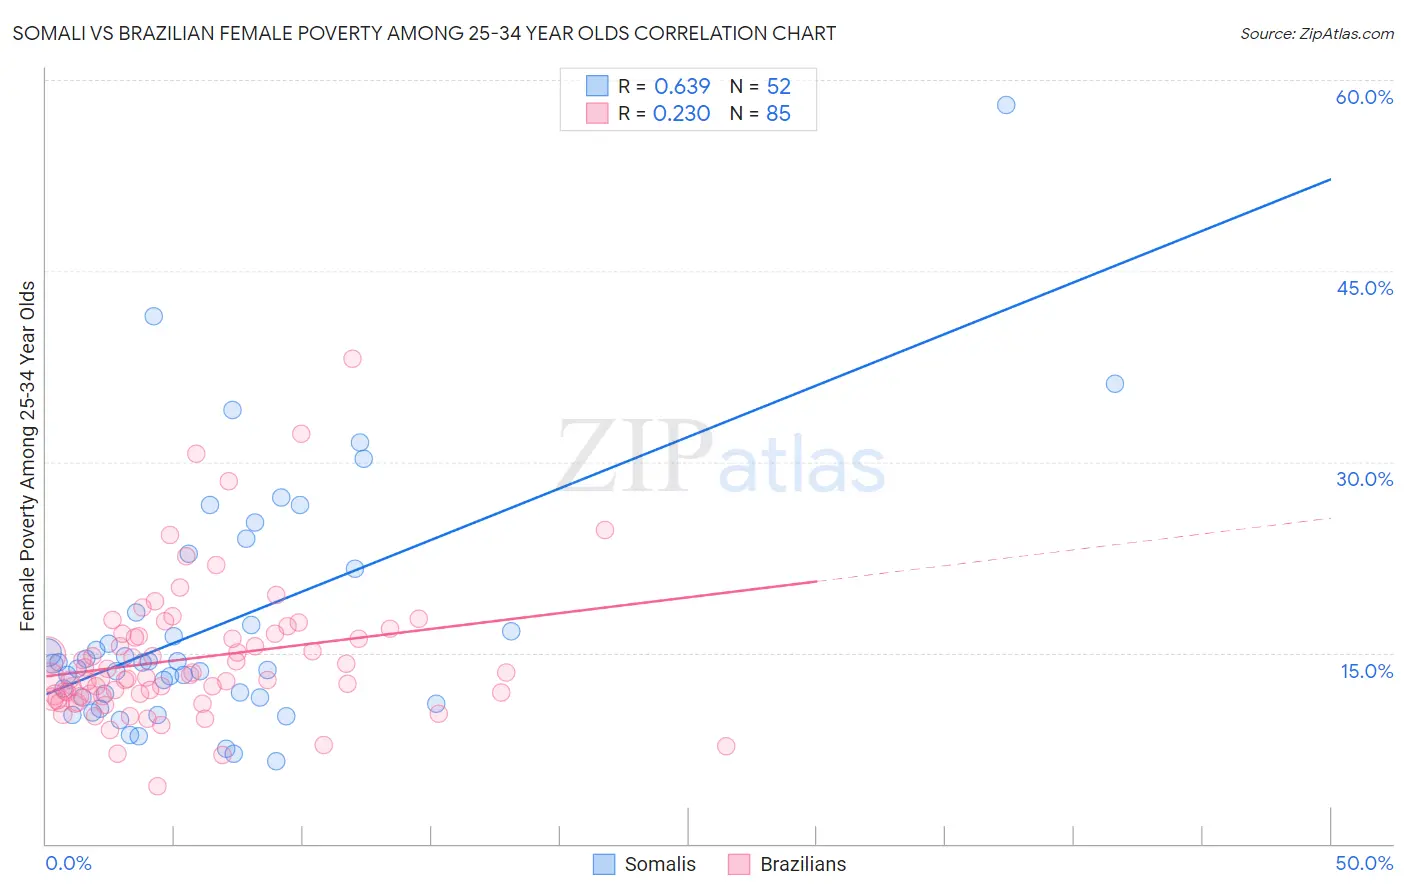 Somali vs Brazilian Female Poverty Among 25-34 Year Olds